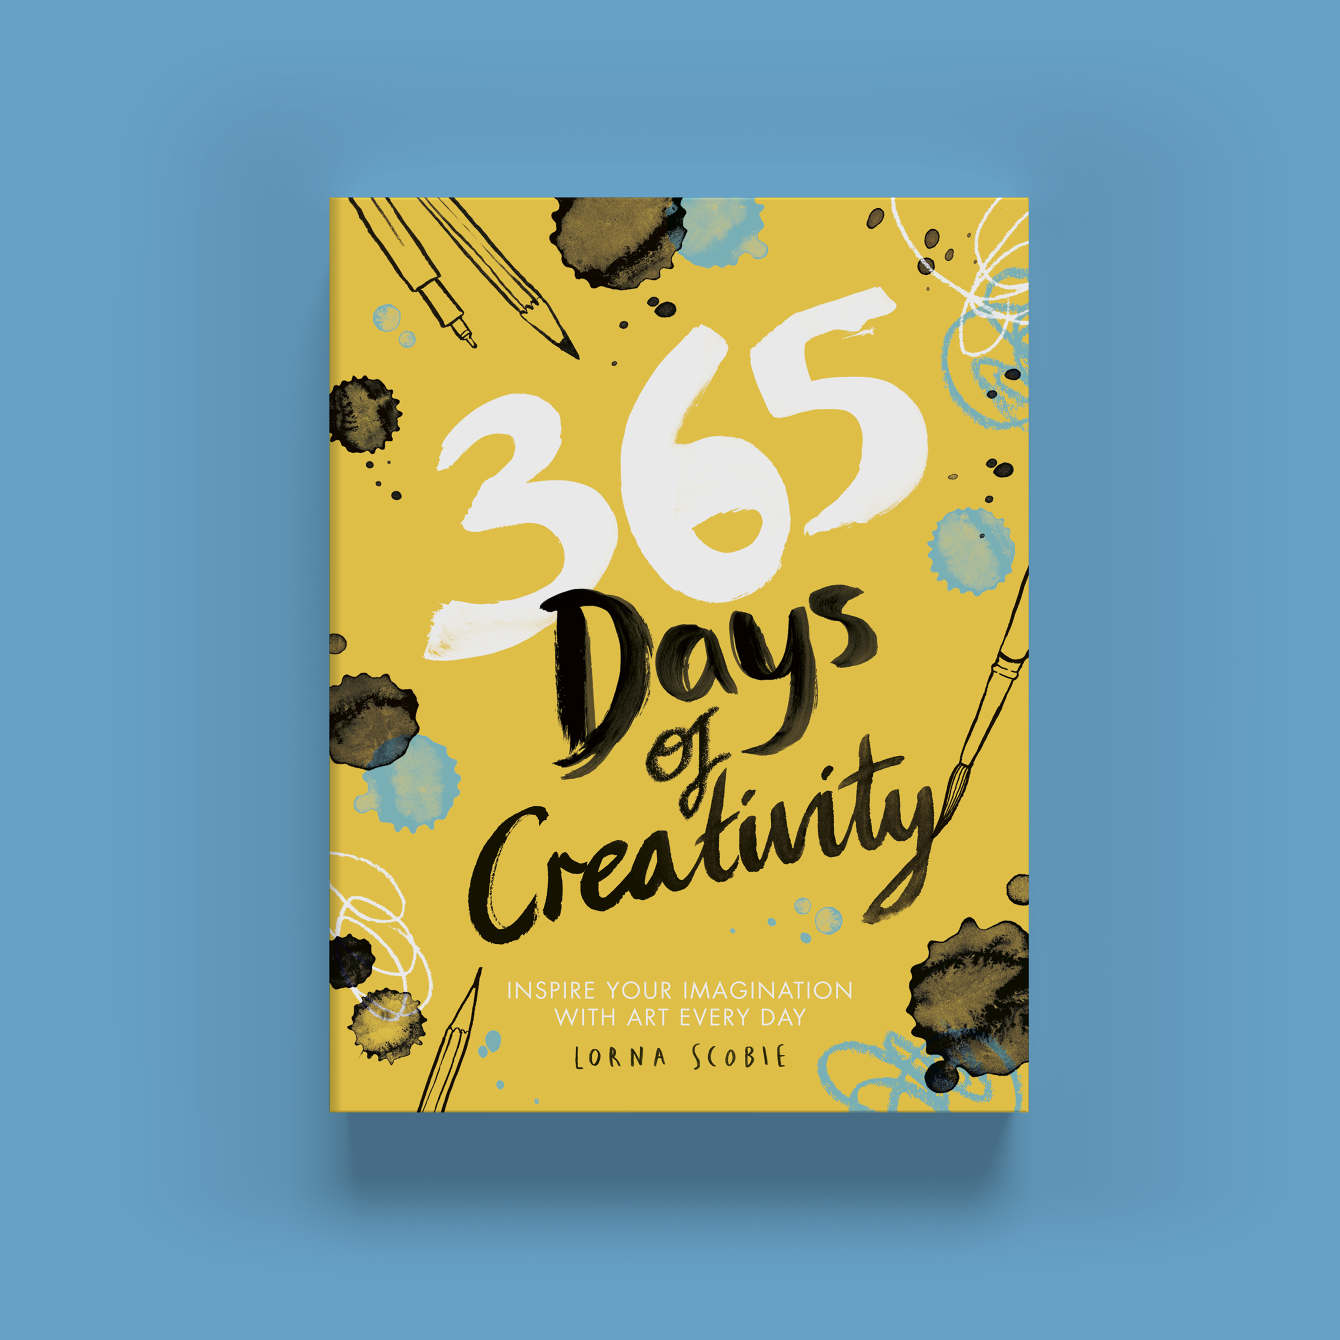 Book: 365 Days of Creativity